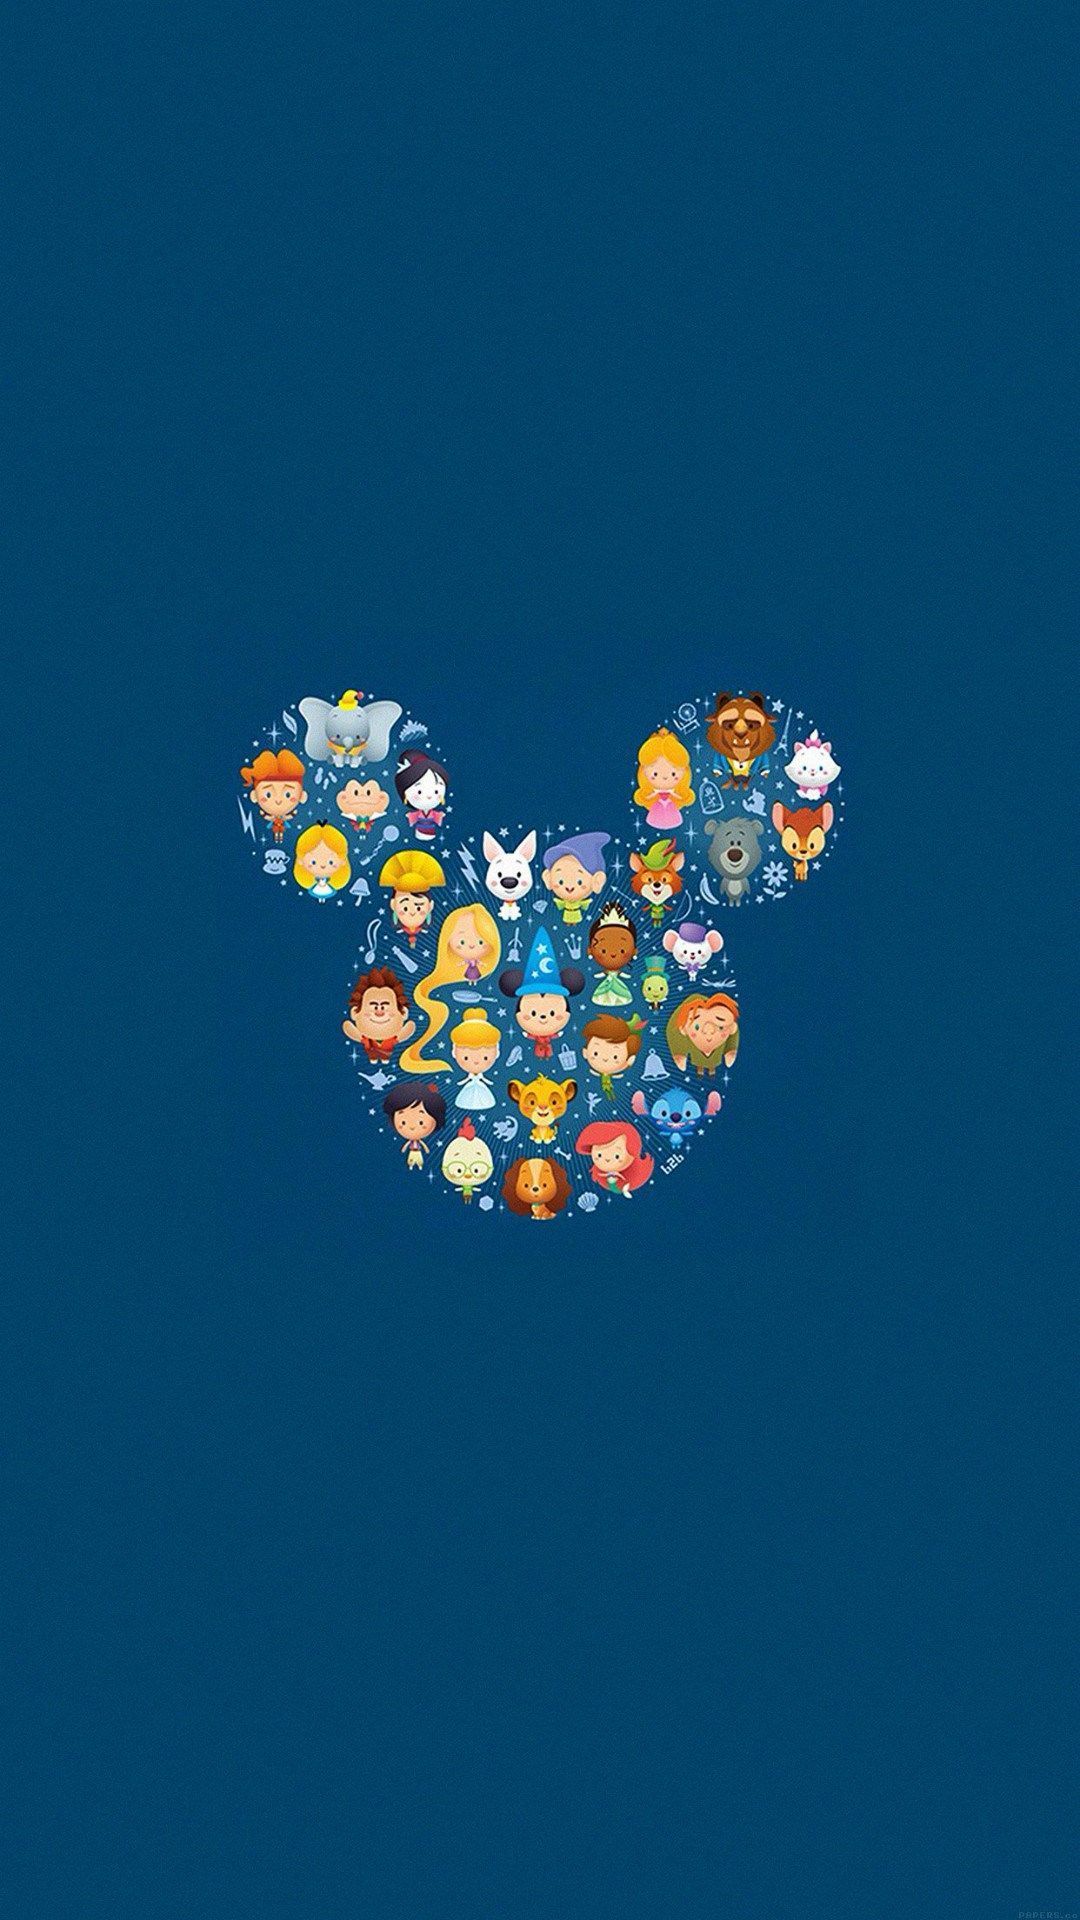 Disney Characters iPhone Wallpaper Free Disney Characters